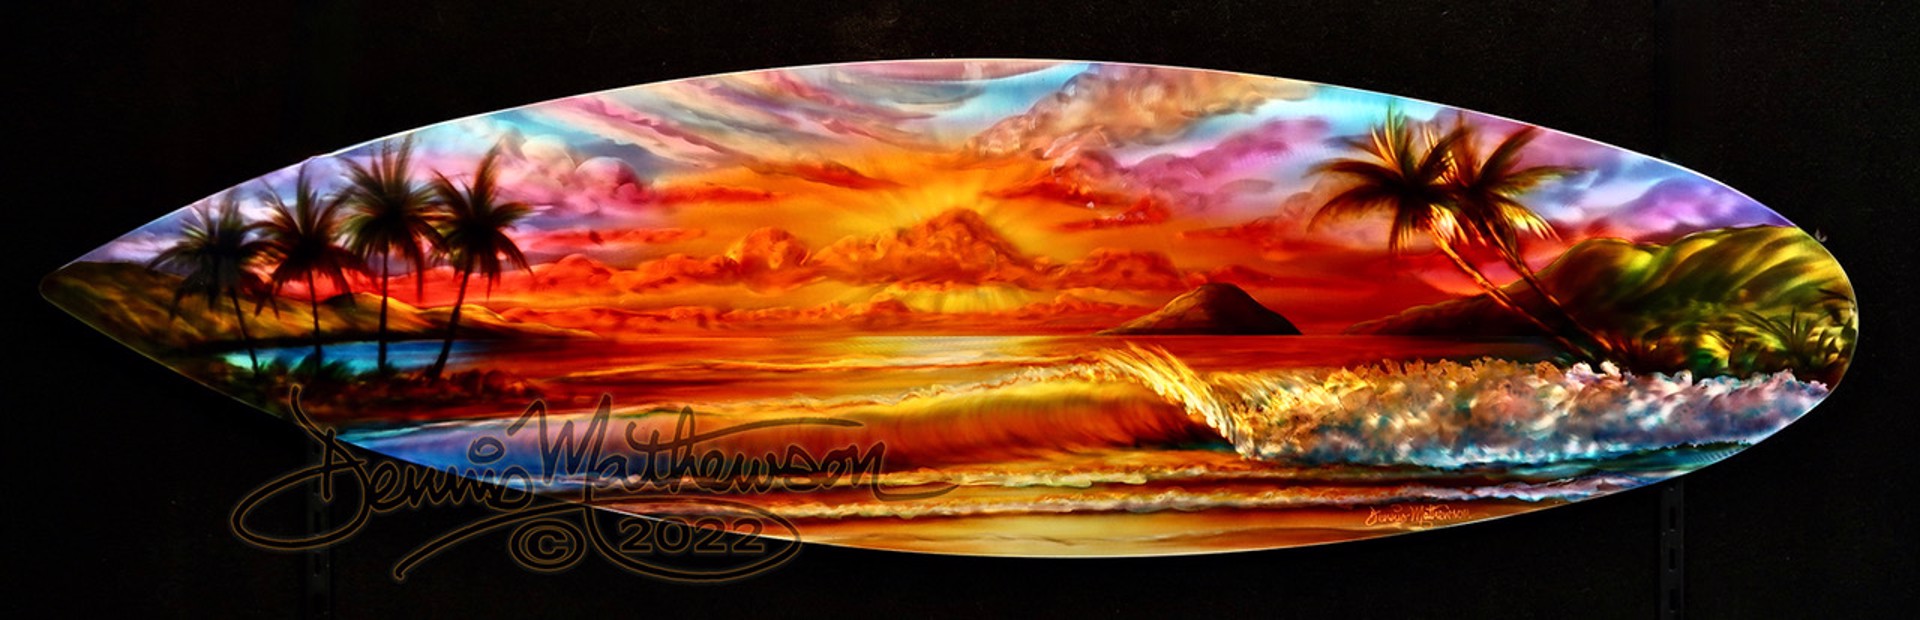 Sunset Surfboard 32 (SB) by Dennis Mathewson